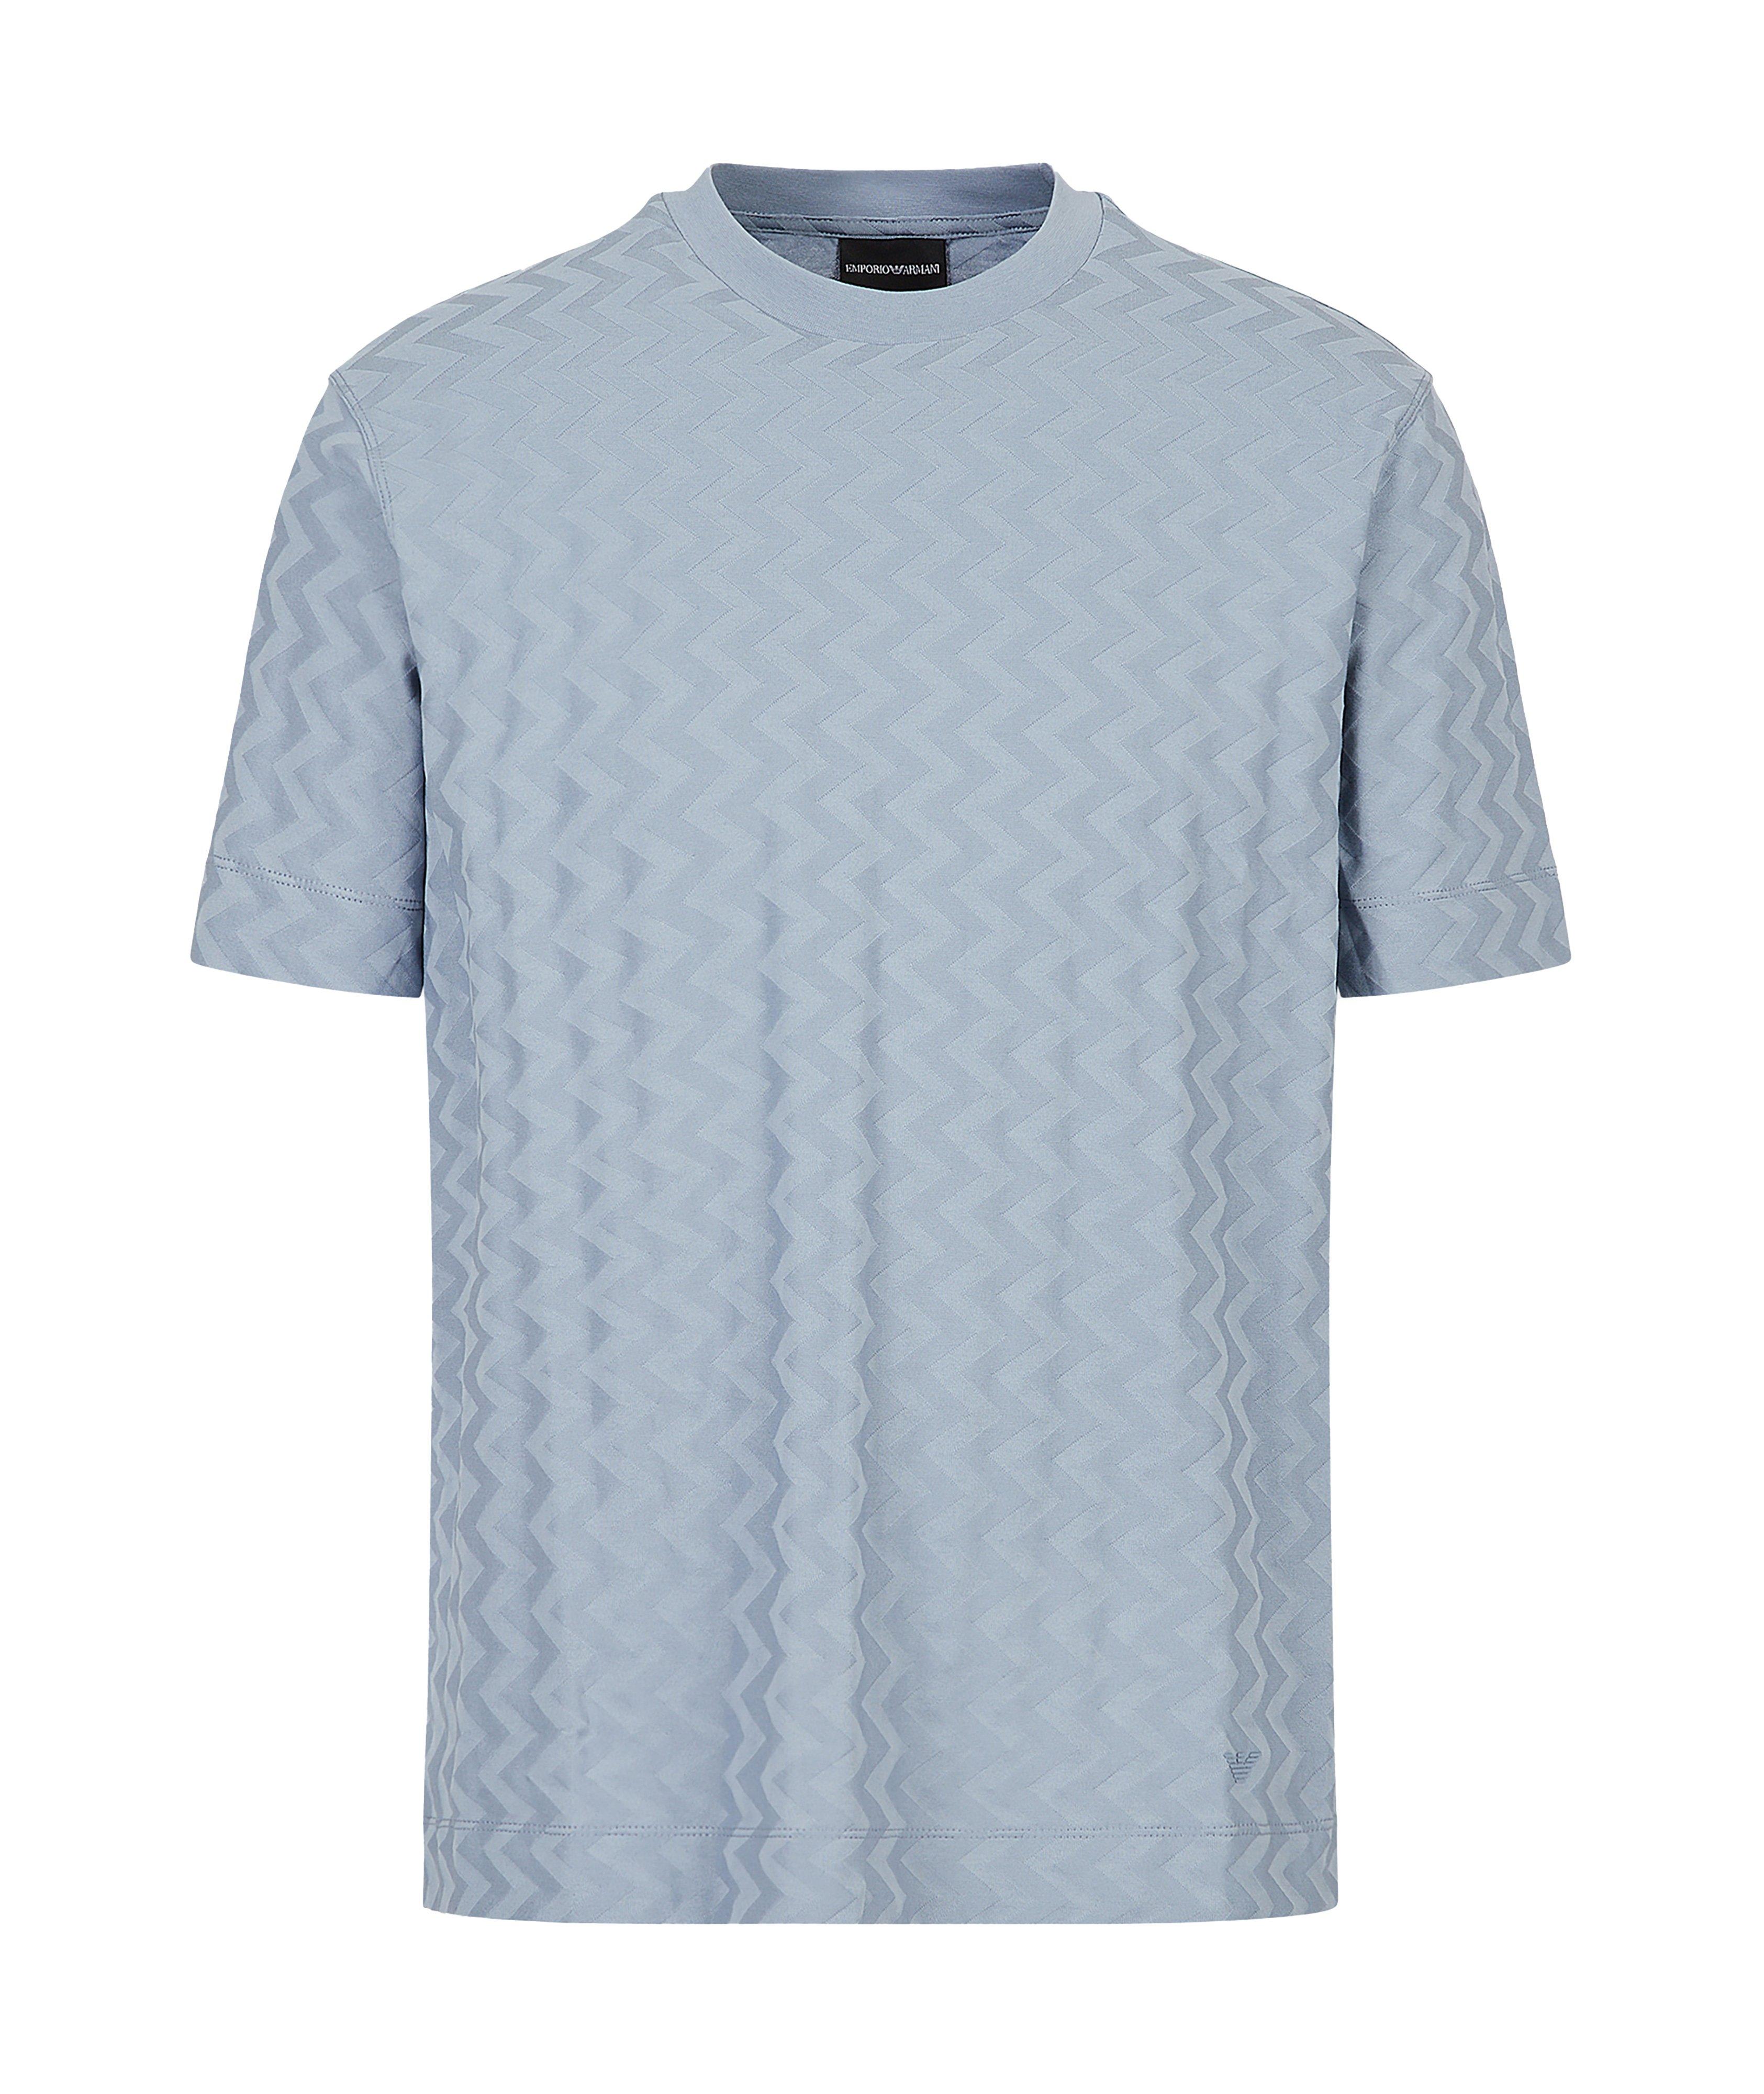 Jacquard Cotton Jersey T-Shirt image 0